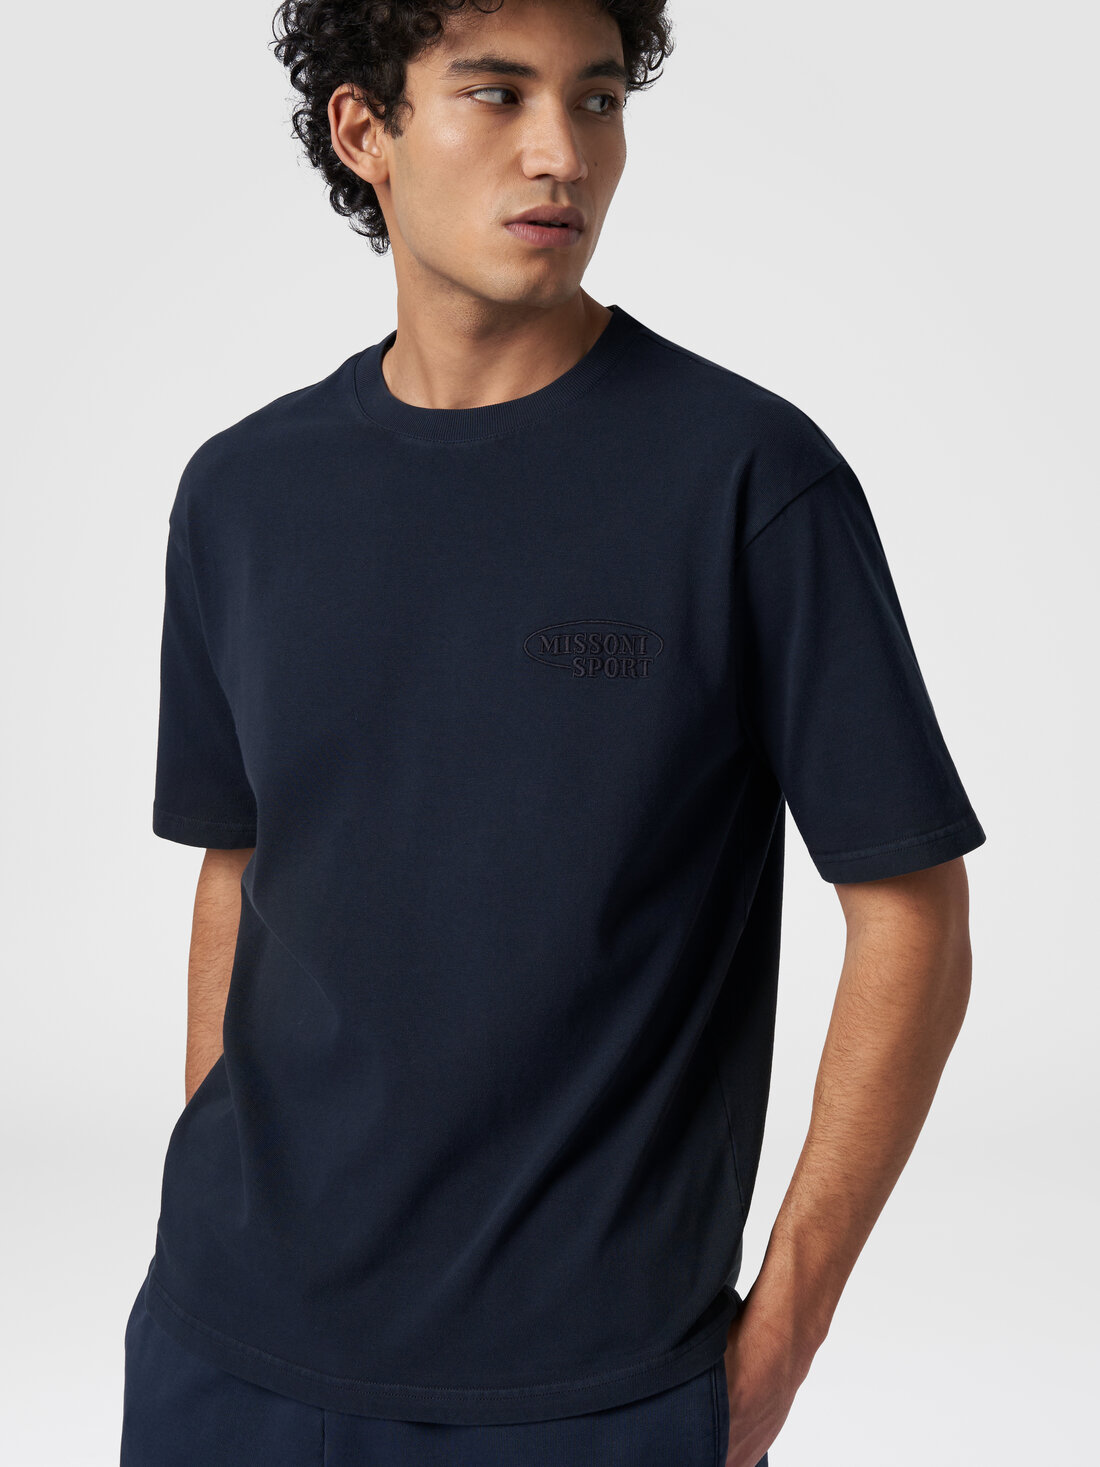 Crew-neck T-shirt in cotton with logo, Navy Blue  - TS24SL00BJ00GYS72EU - 3